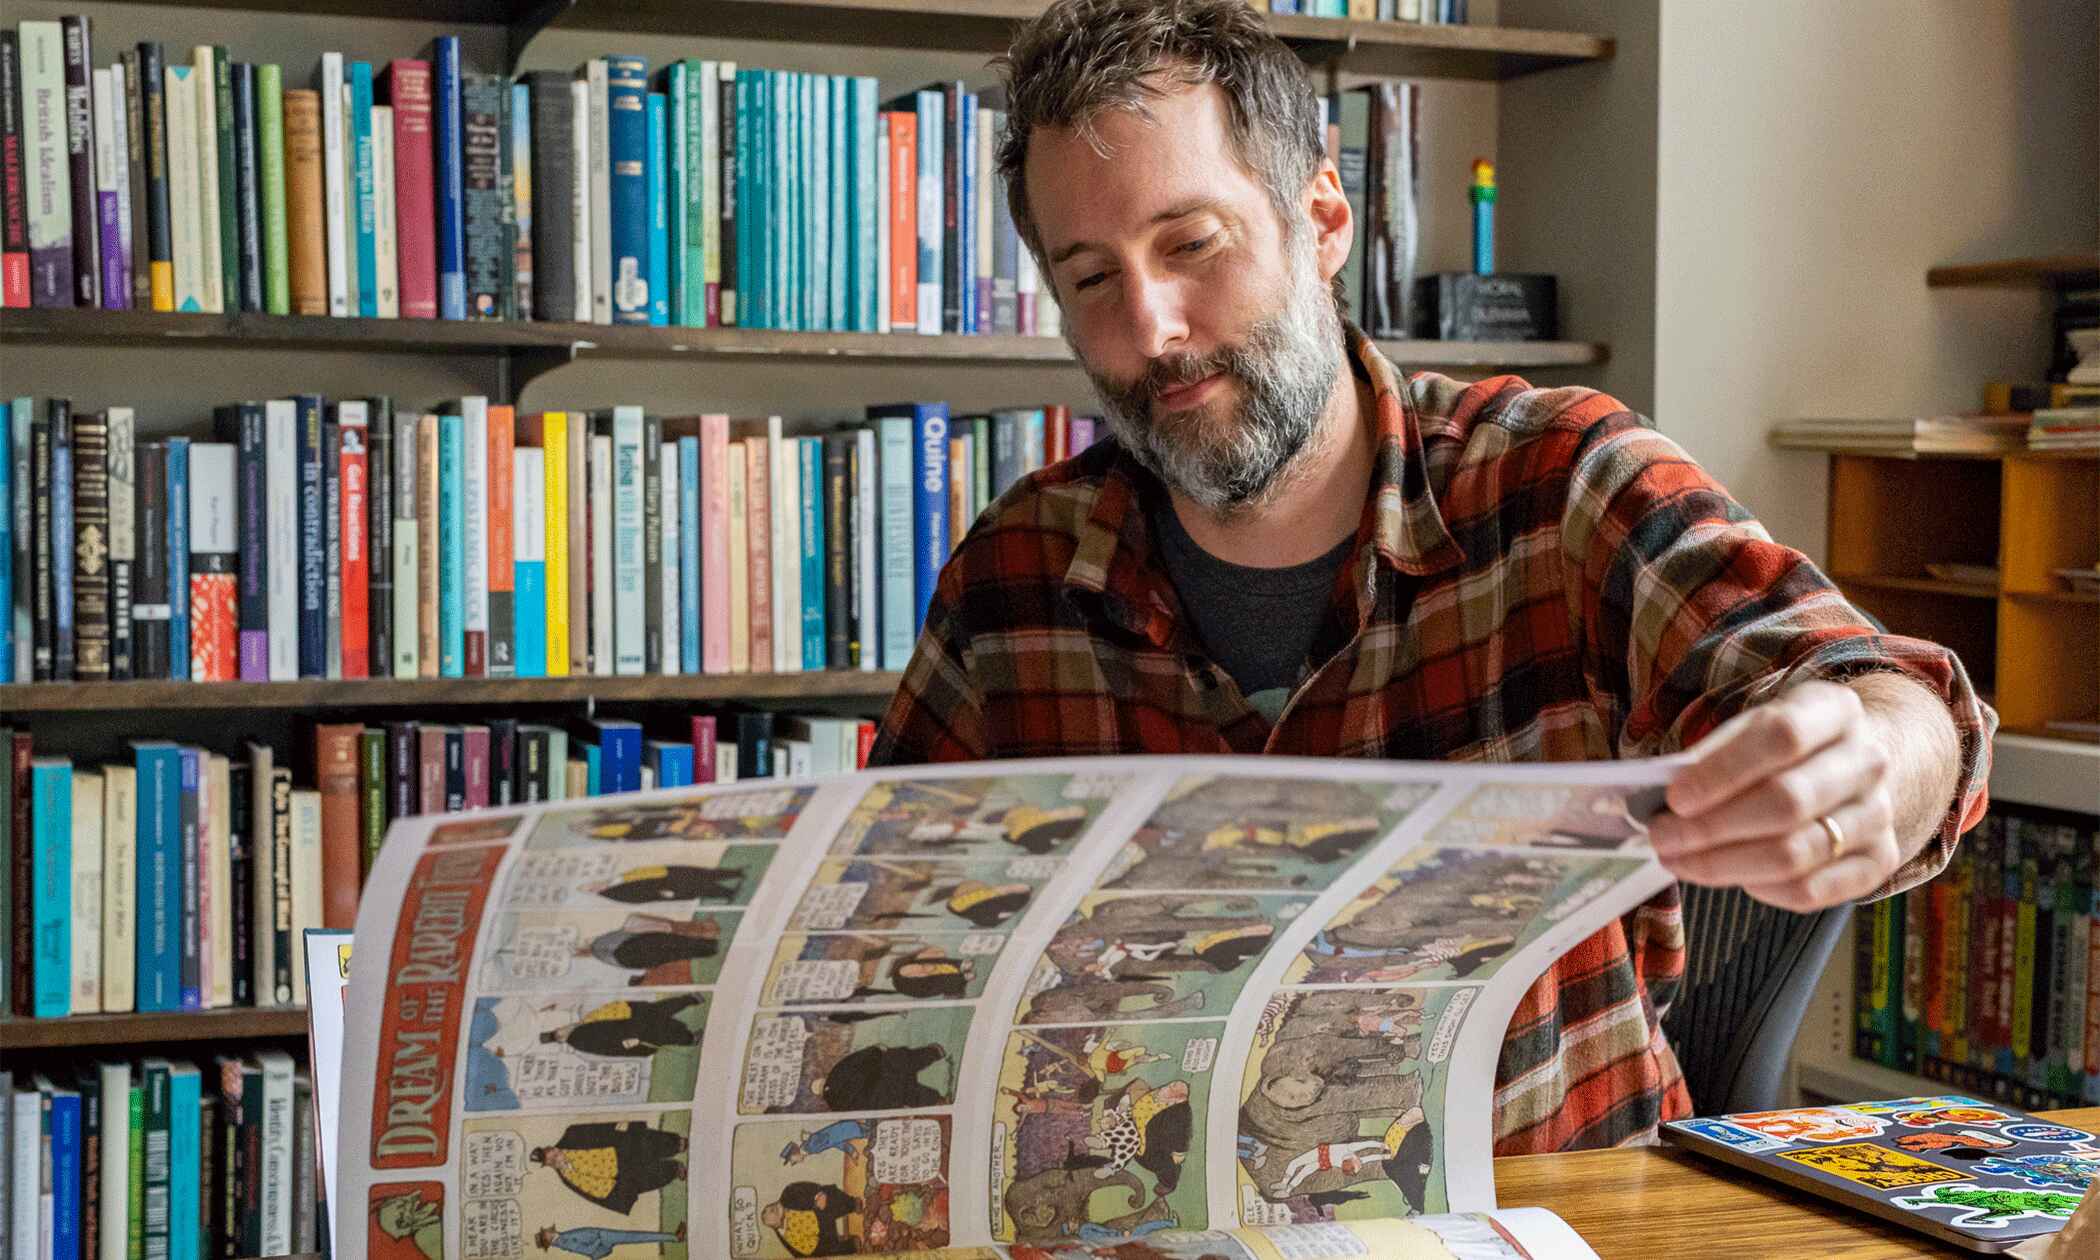 Sam Cowling peruses an oversized comic book.